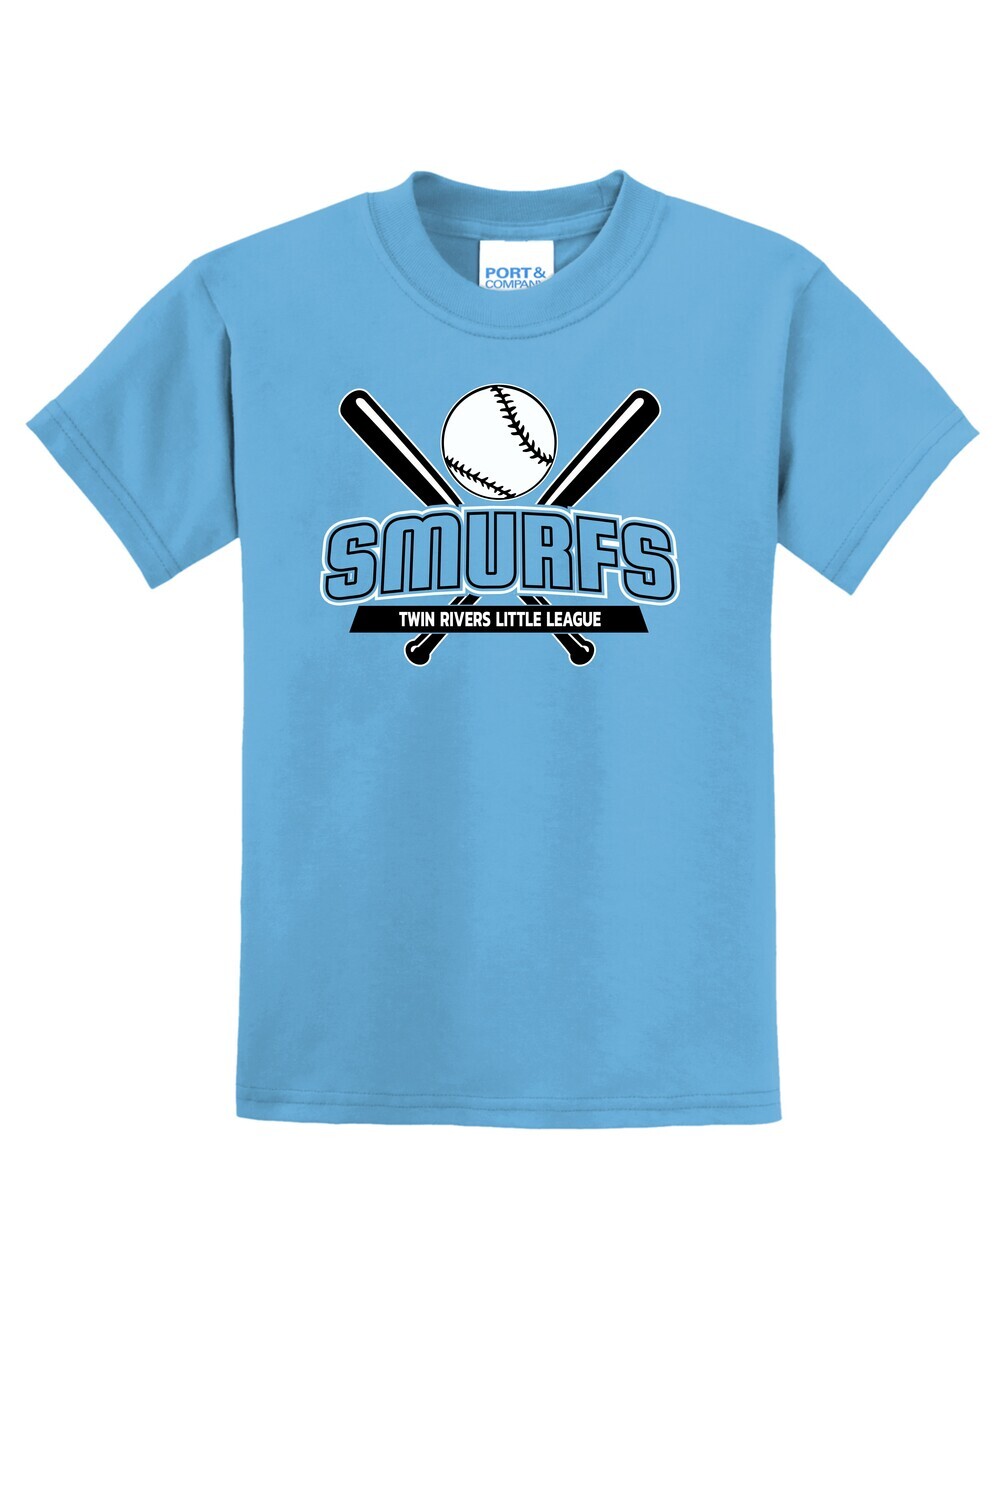 Smurfs T-Shirt